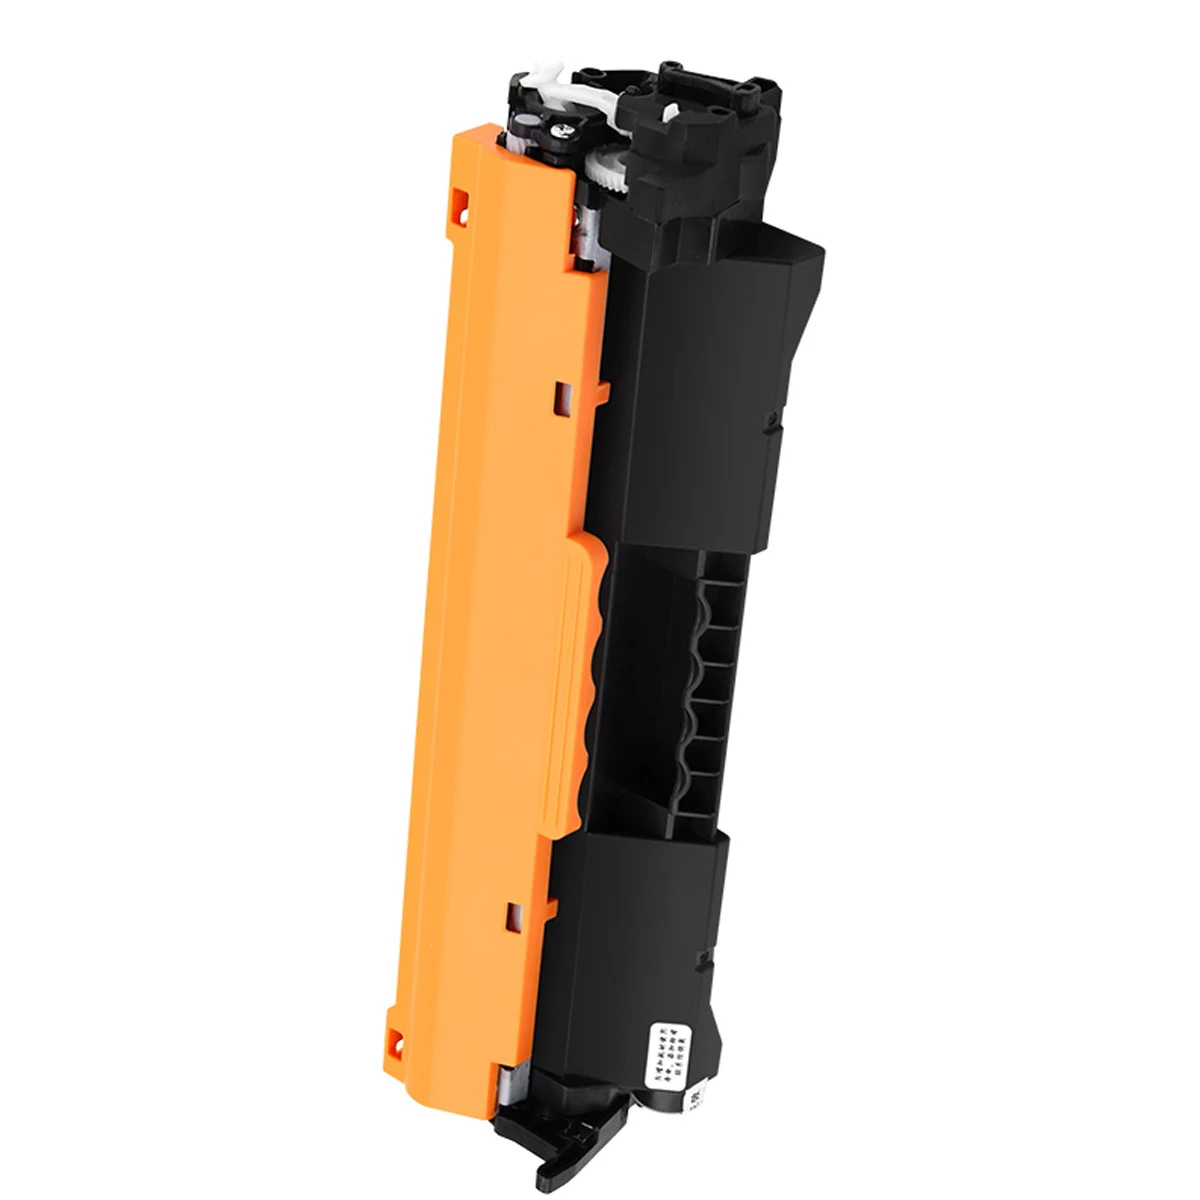 

new laserjet toner cartridge for HP LaserJet Pro M102/M102a/M102w/MFP M130/M130a/M130fn/M130fw/M130nw/for HP CF217a/FOR hp 17A/